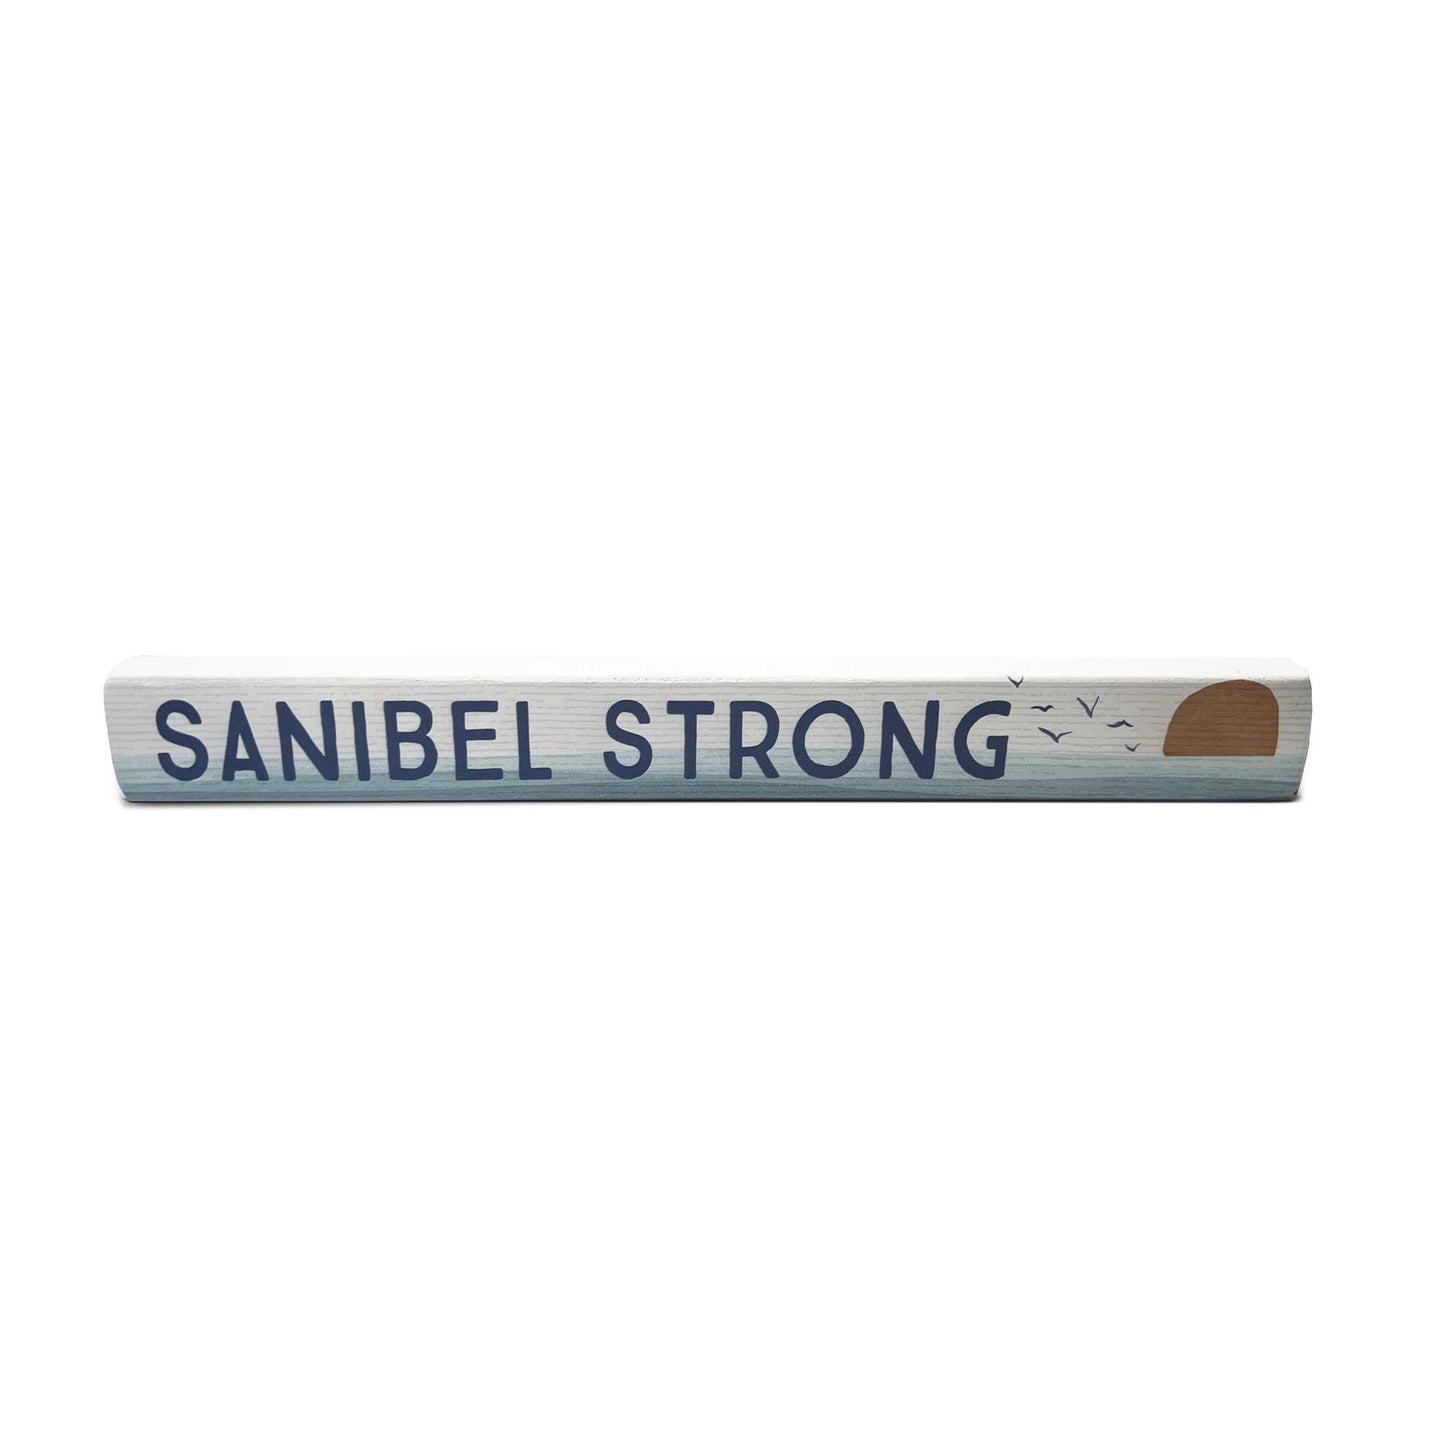 Sanibel Strong Shelf Art Decor